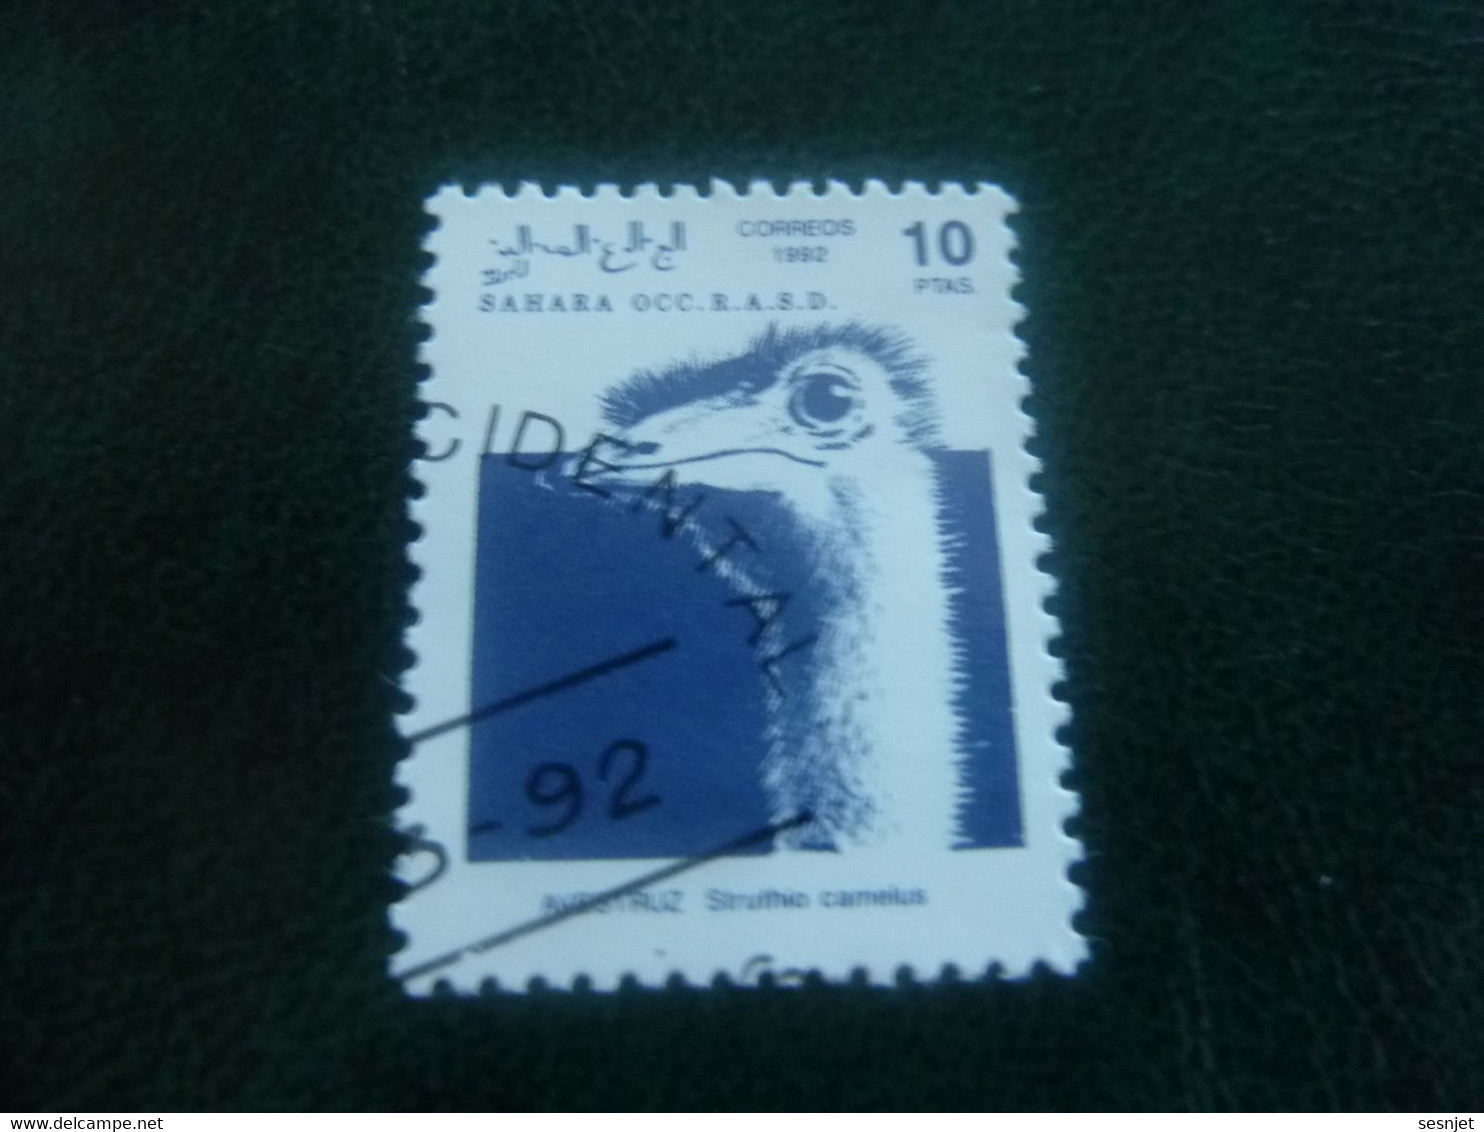 Sahara Occ R.a.sd.d. - Autruche - Val 10 Ptas - Bleu - Oblitéré - Année 1992 - - Ostriches